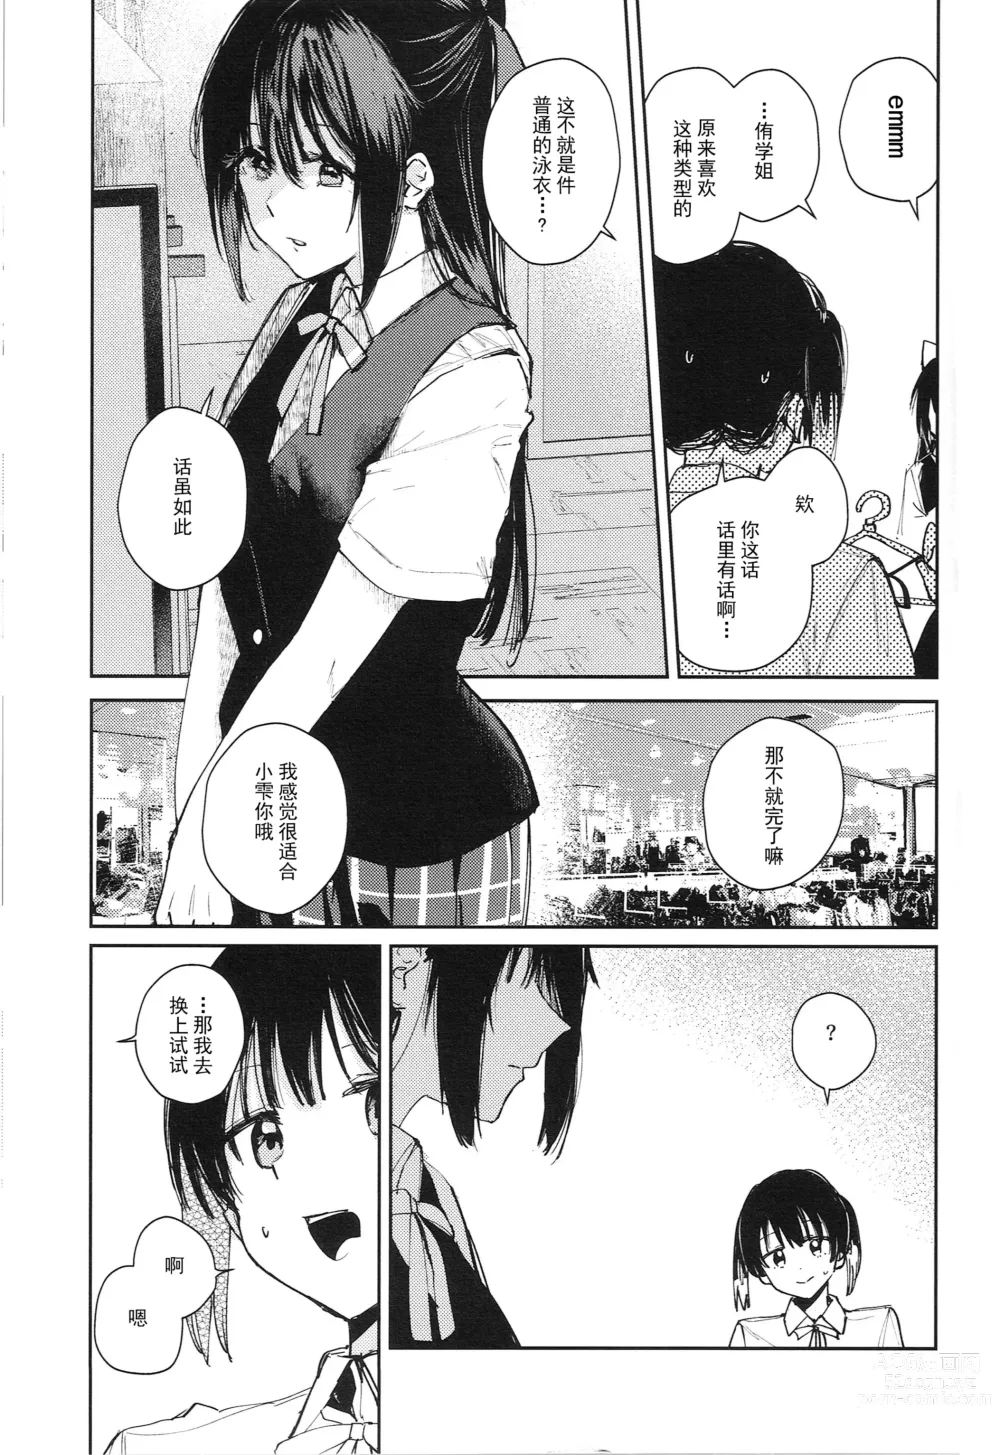 Page 7 of doujinshi Aoku Iroasero